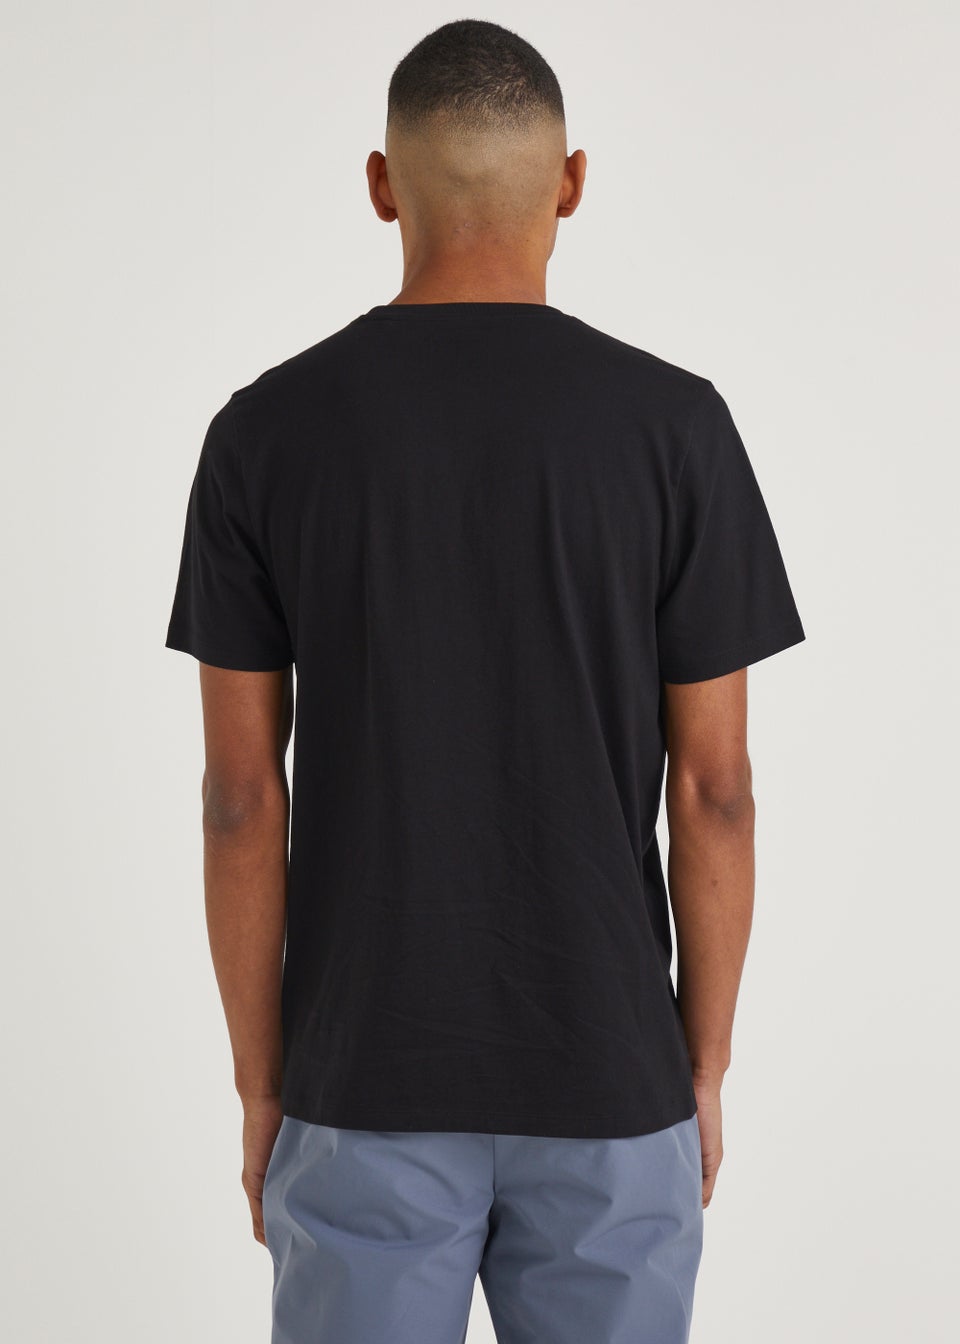 US Athletic Black Flux City T-Shirt - Matalan